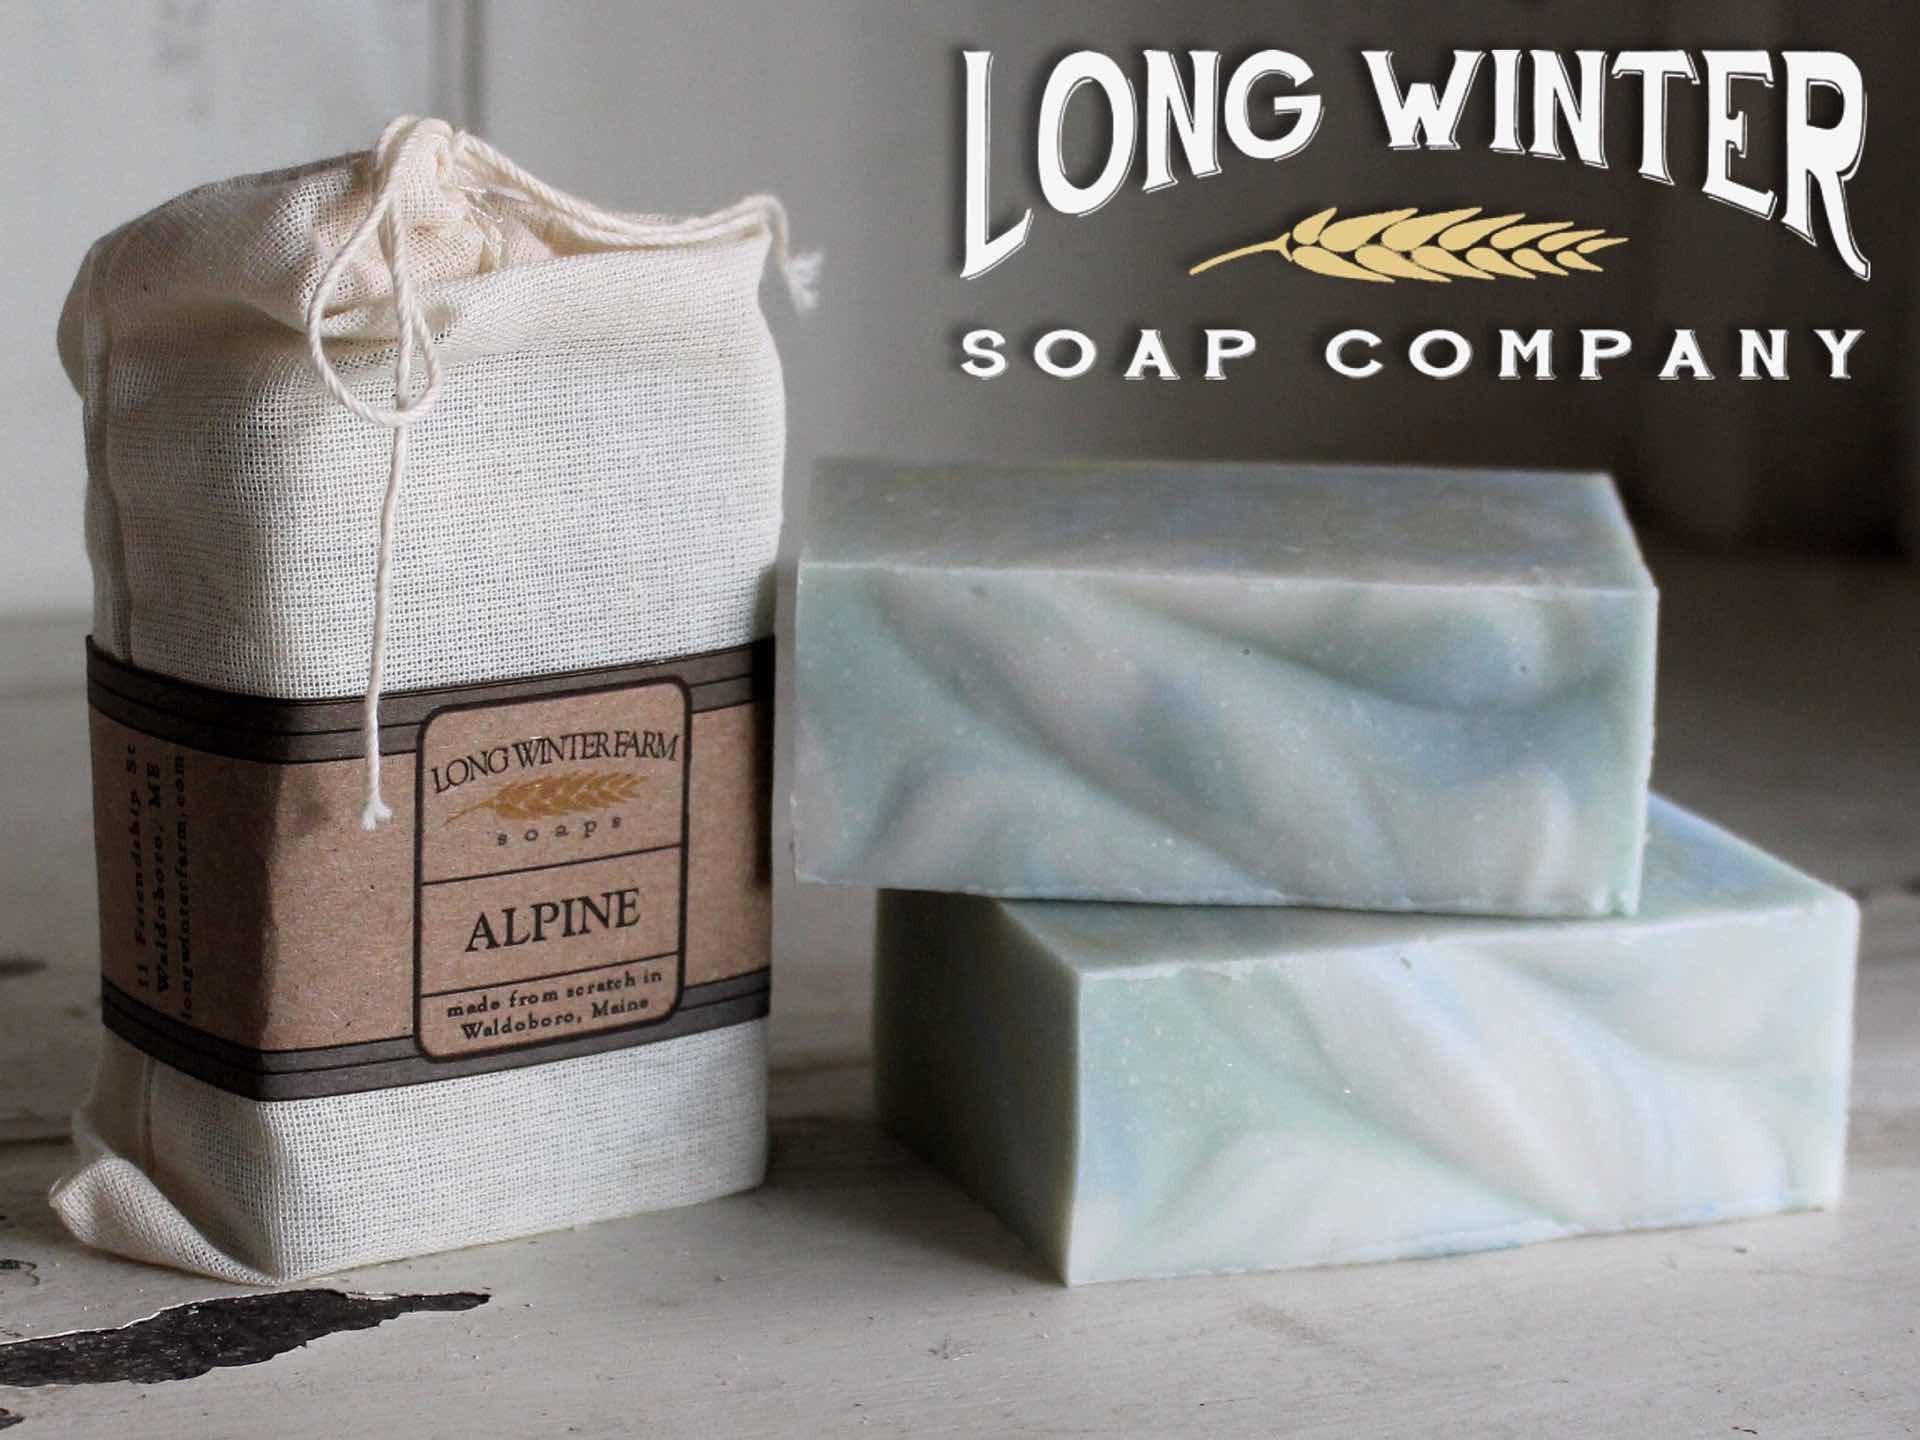 Long Winter Farm's cold-process soaps. ($8 per five-ounce bar)